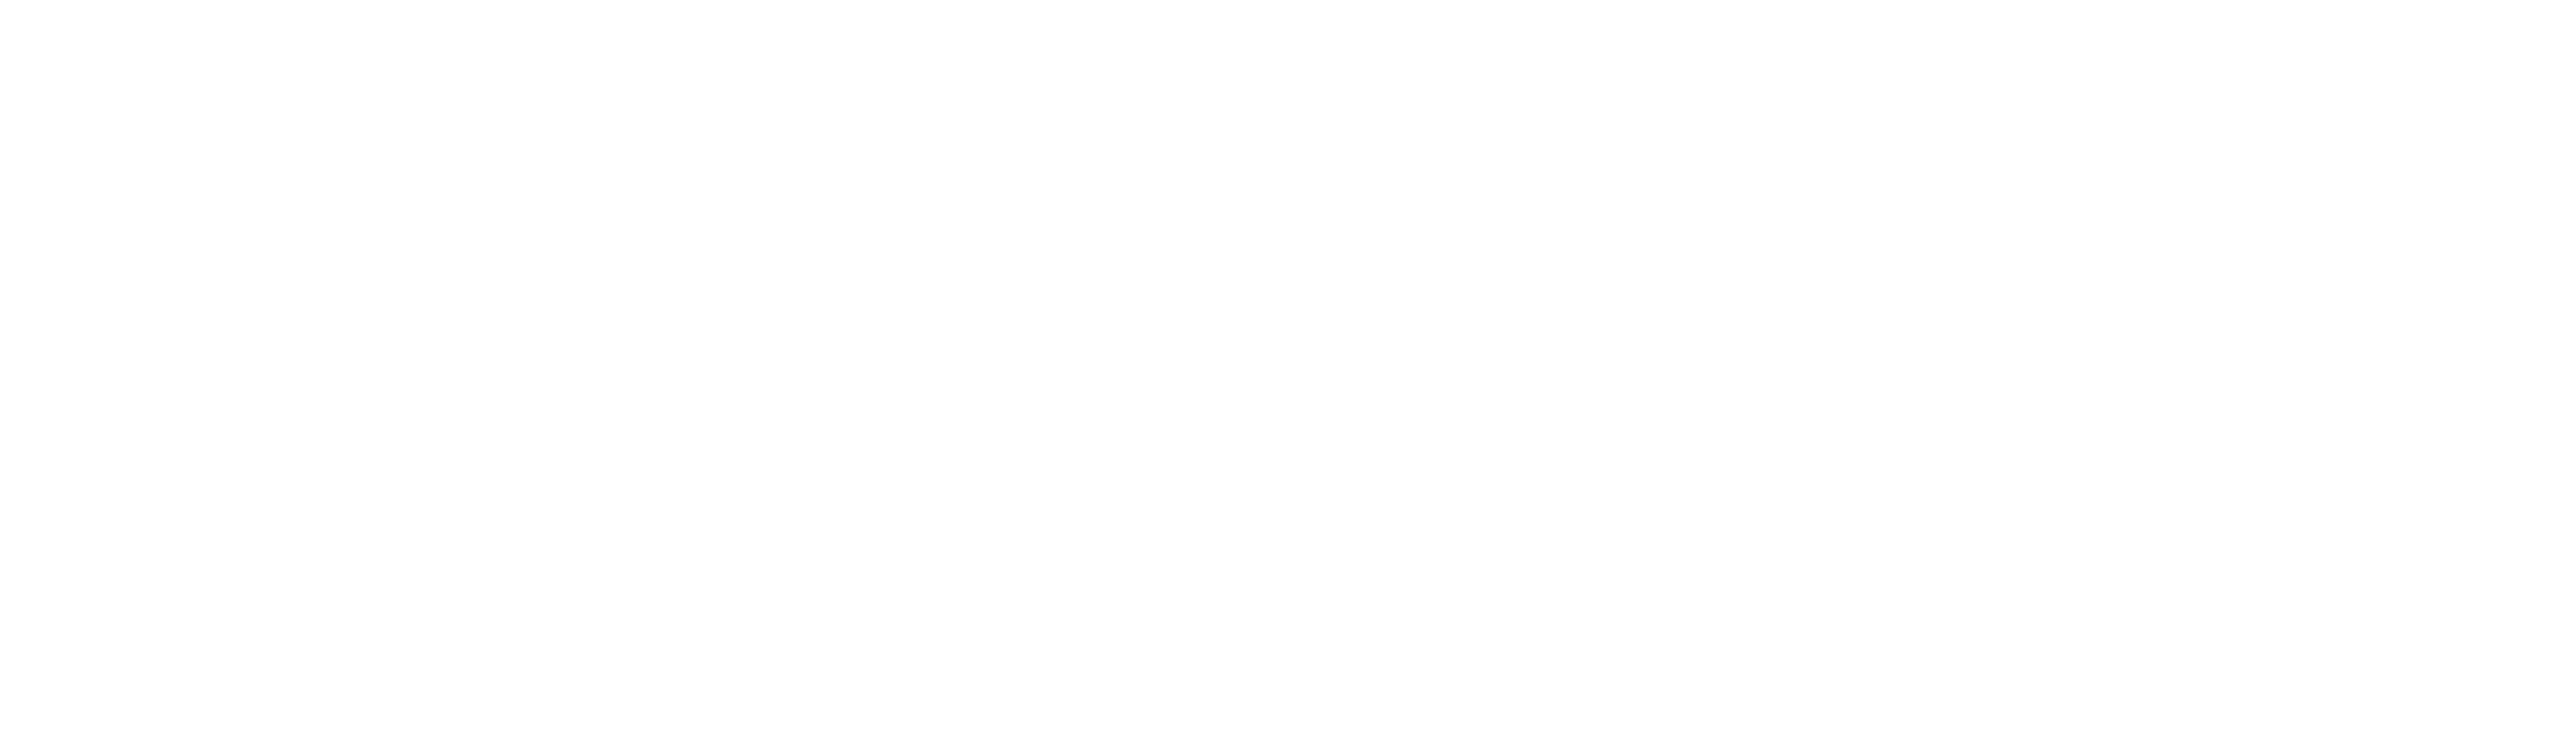 Turtleback Trailers